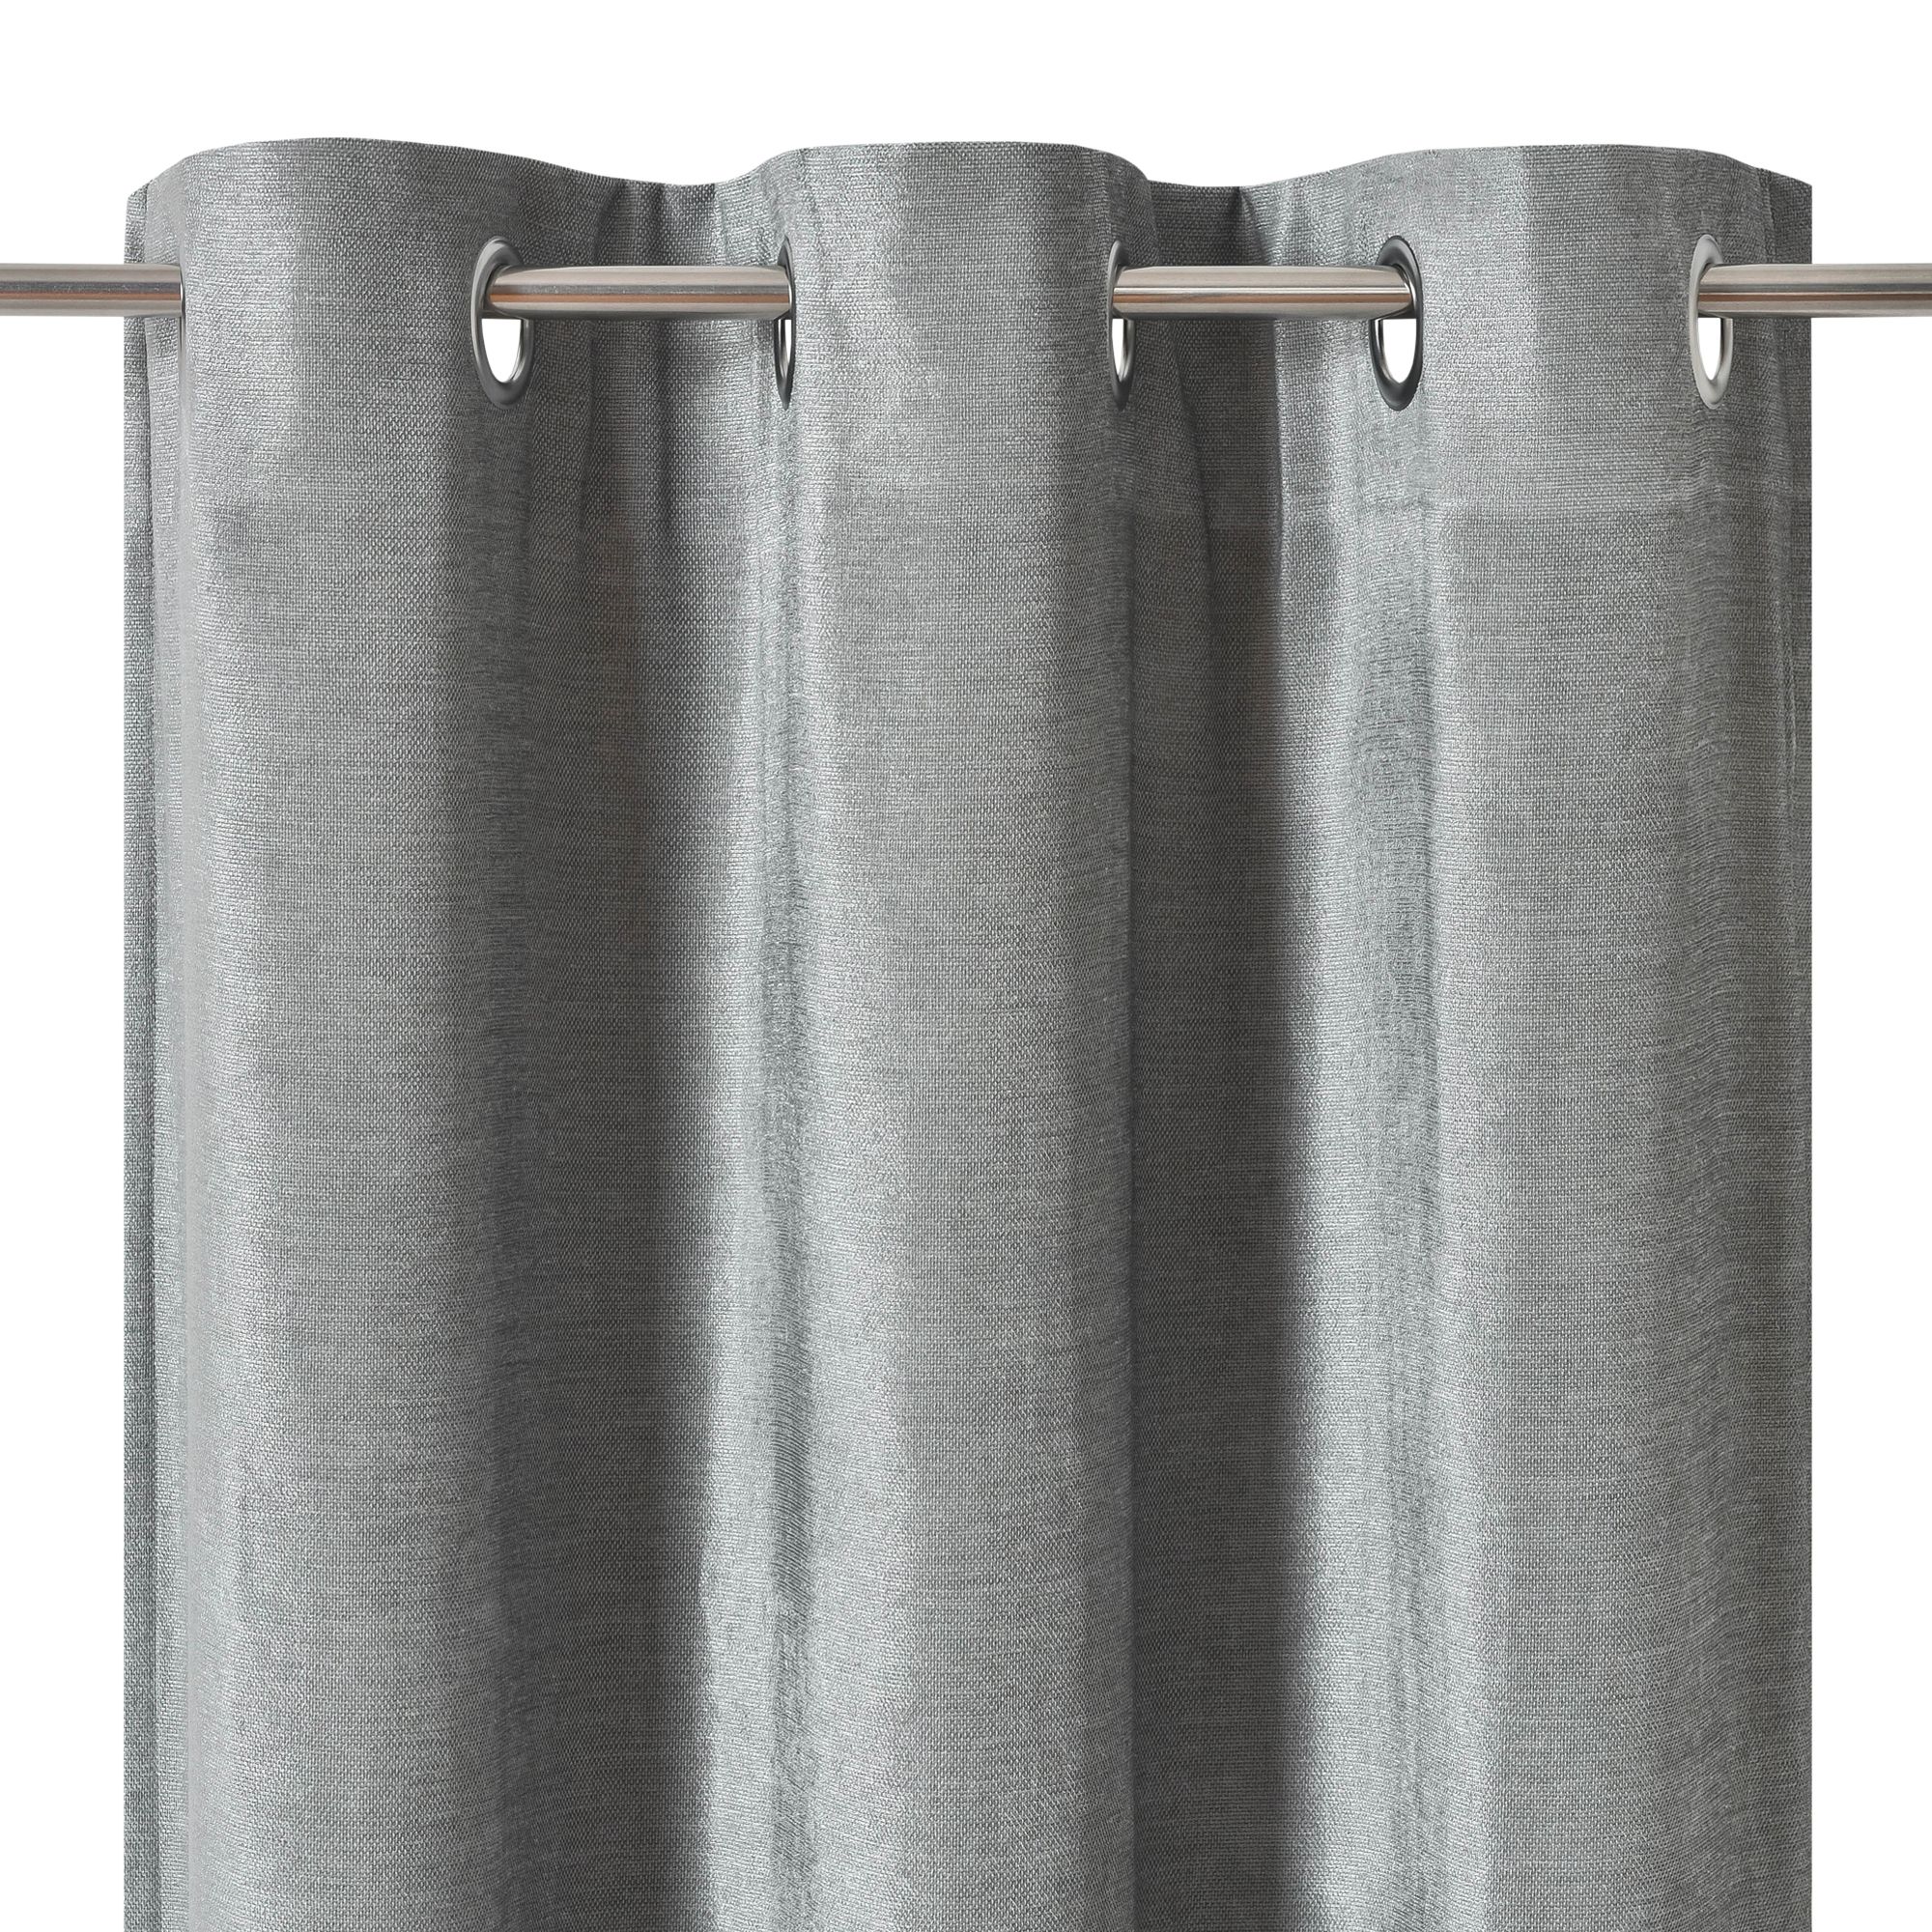 Arntzen Grey Plain woven Lined Eyelet Curtain (W)117cm (L)137cm, Pair